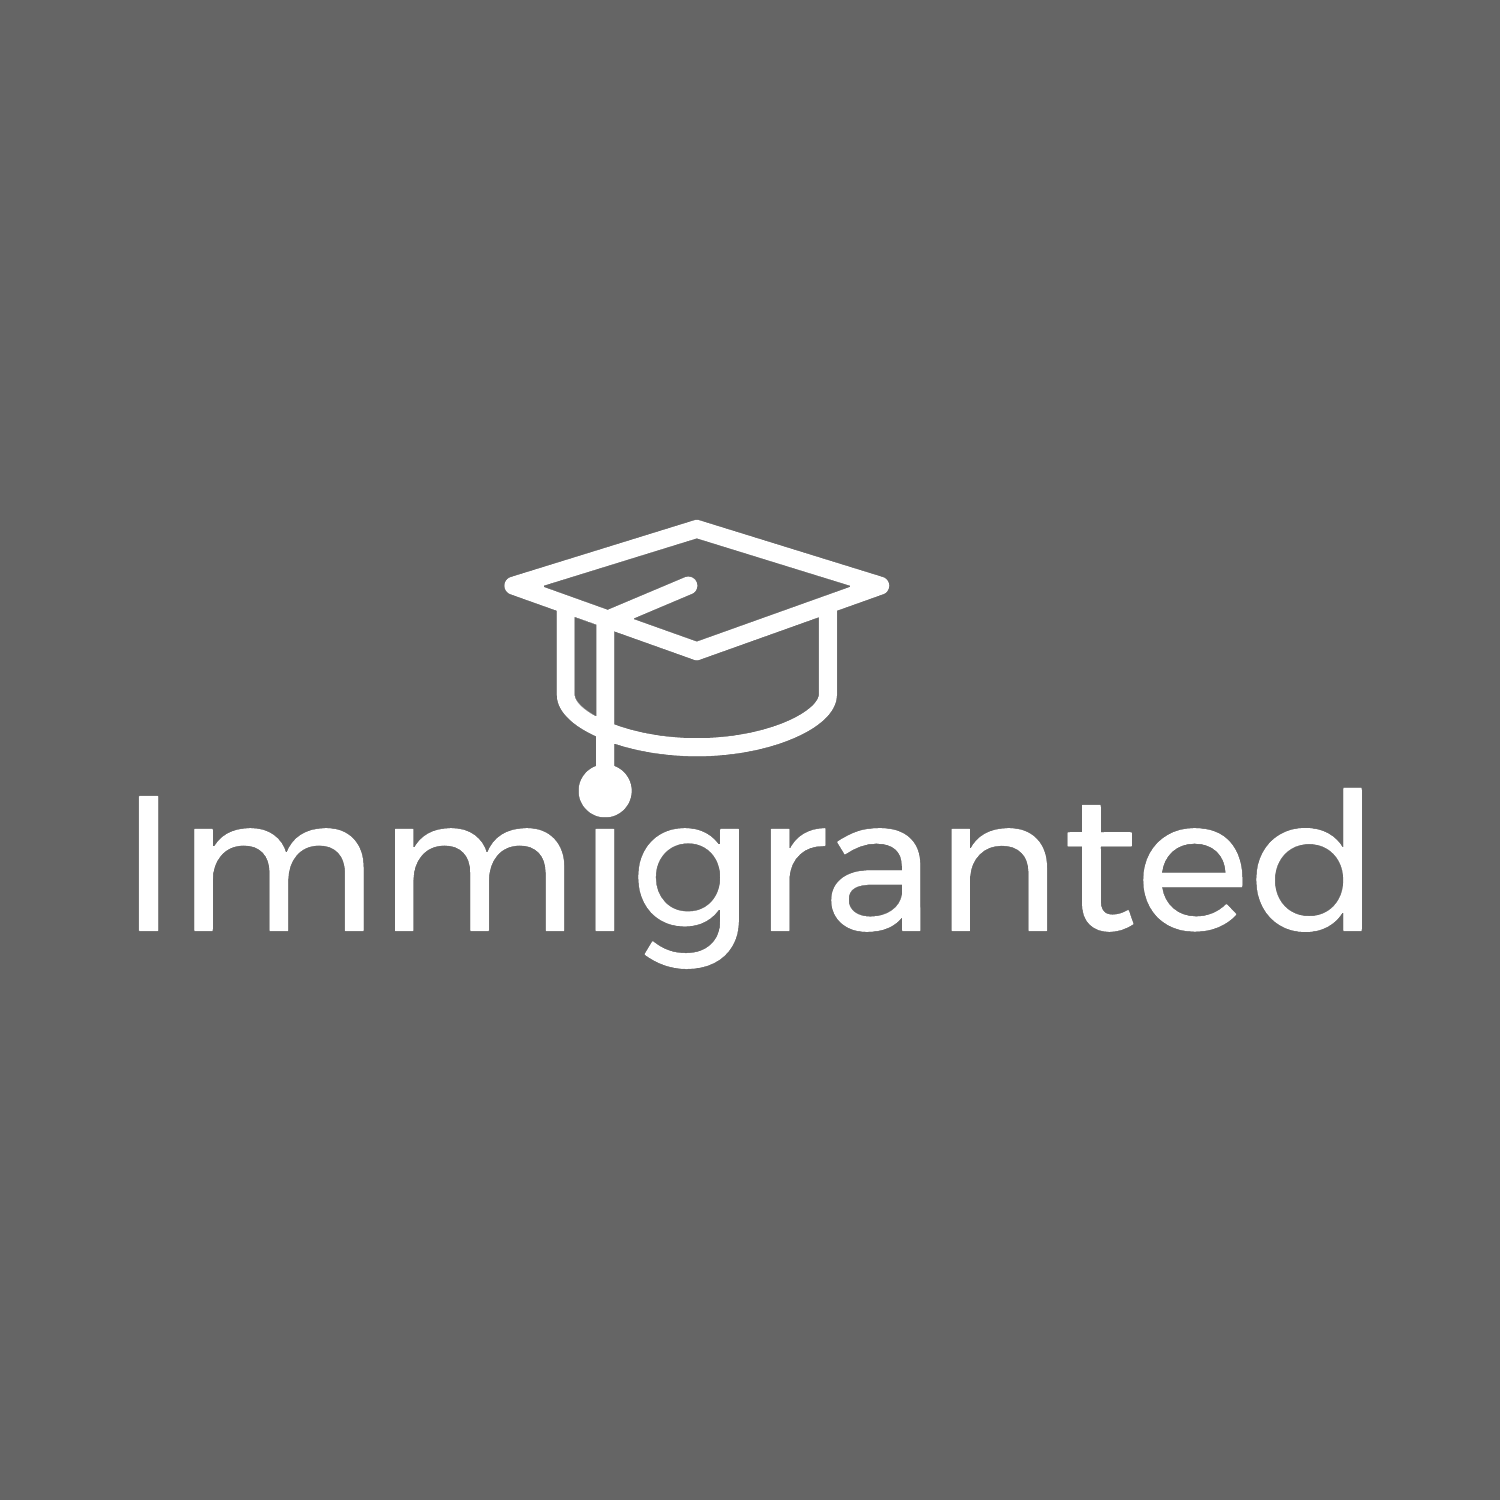 Immigranted logo